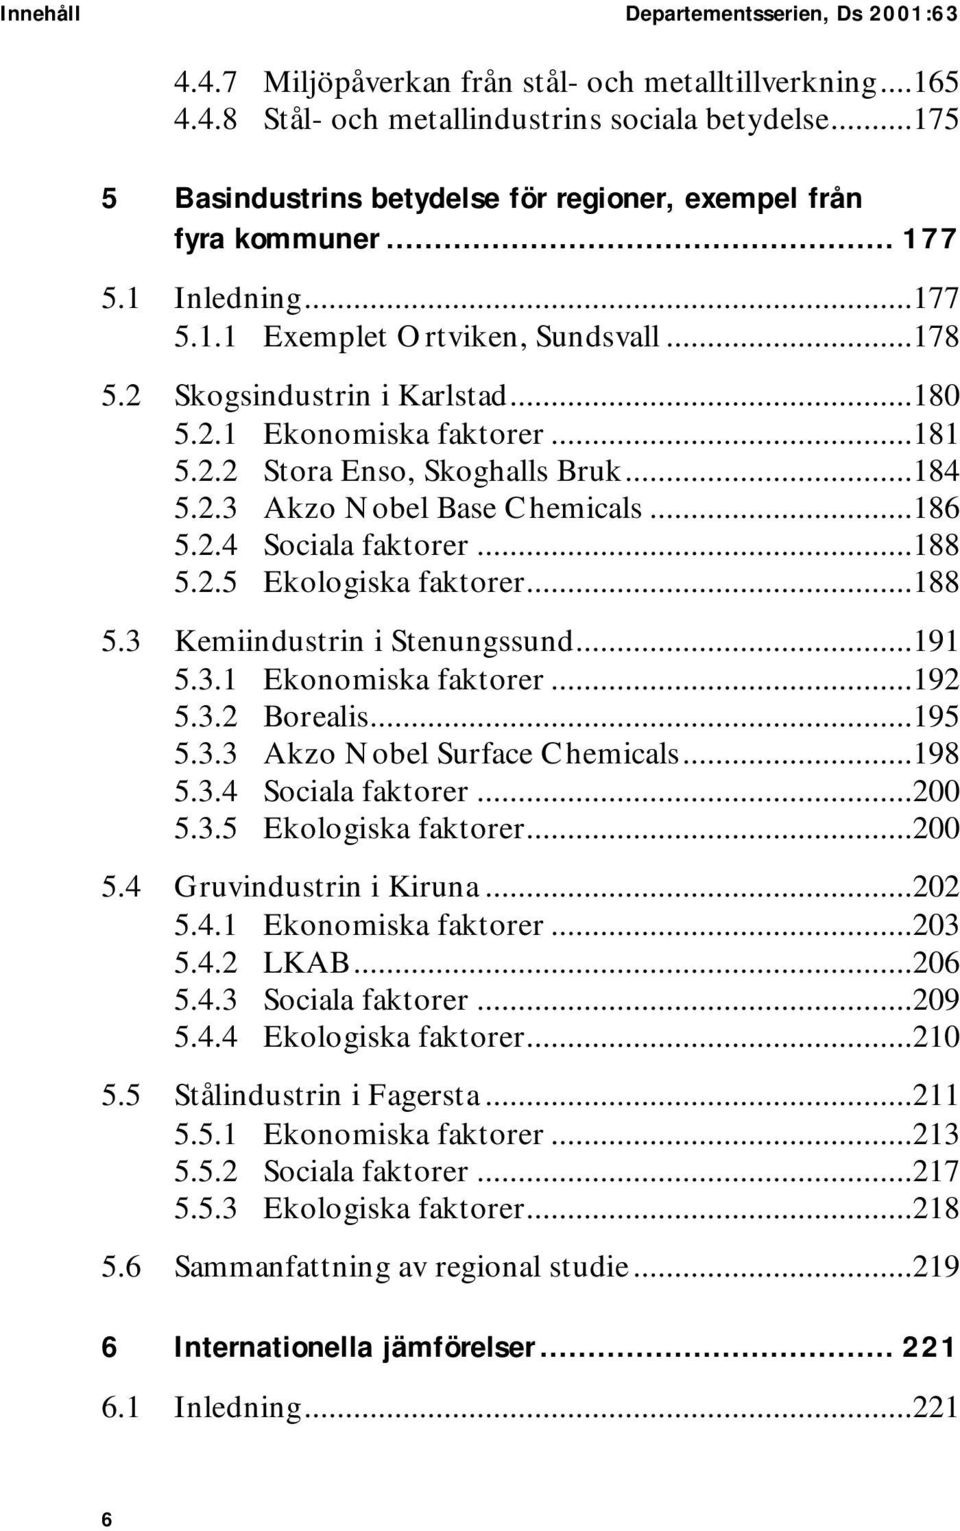 ..181 5.2.2 Stora Enso, Skoghalls Bruk...184 5.2.3 Akzo Nobel Base Chemicals...186 5.2.4 Sociala faktorer...188 5.2.5 Ekologiska faktorer...188 5.3 Kemiindustrin i Stenungssund...191 5.3.1 Ekonomiska faktorer.